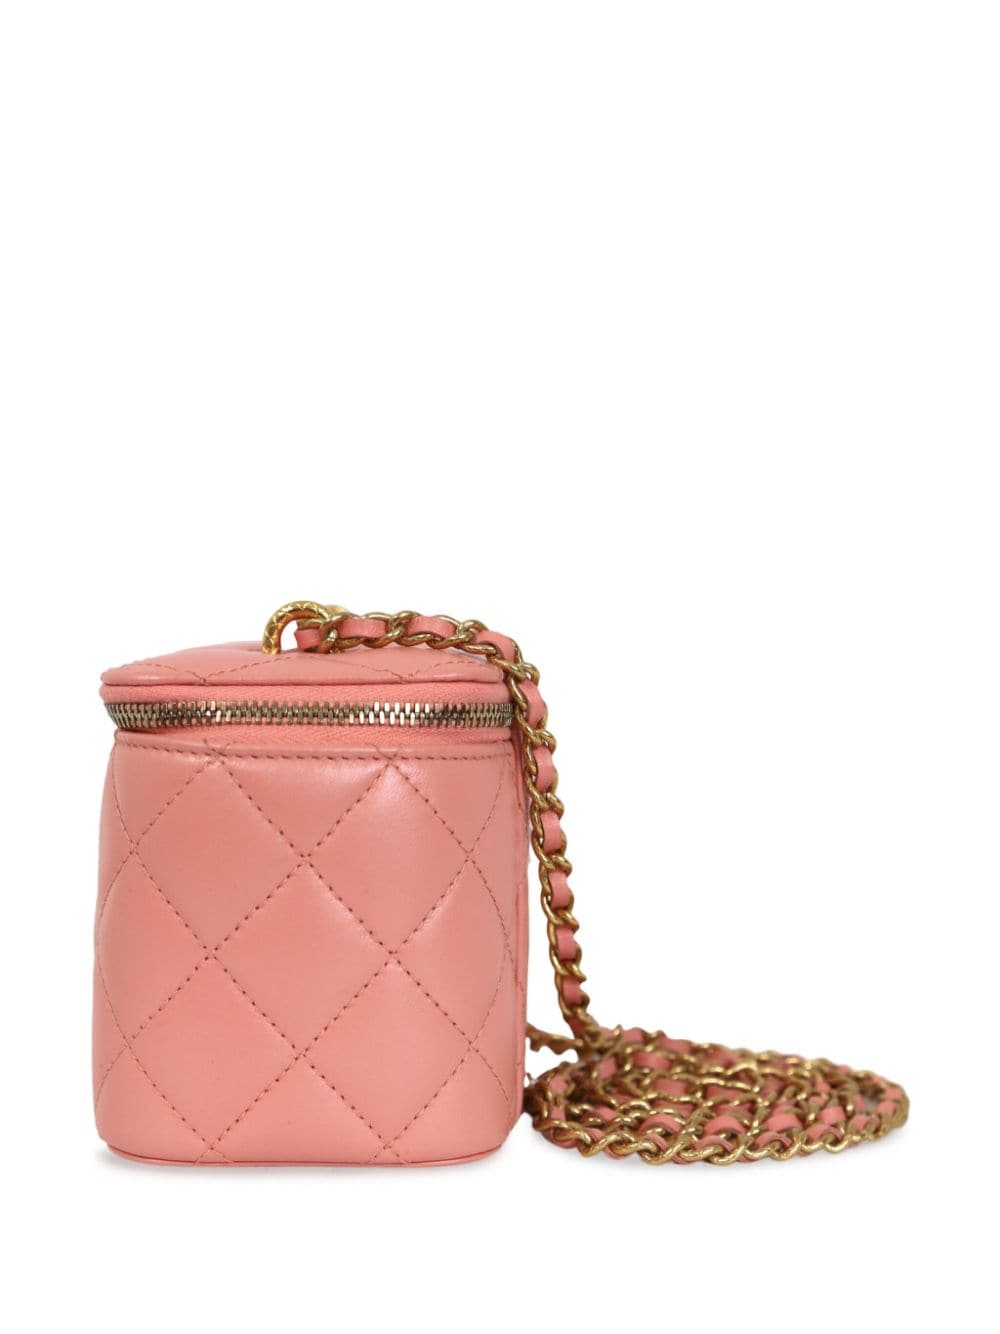 Pre-owned Chanel Cc Vanity Shoulder Bag In Pink